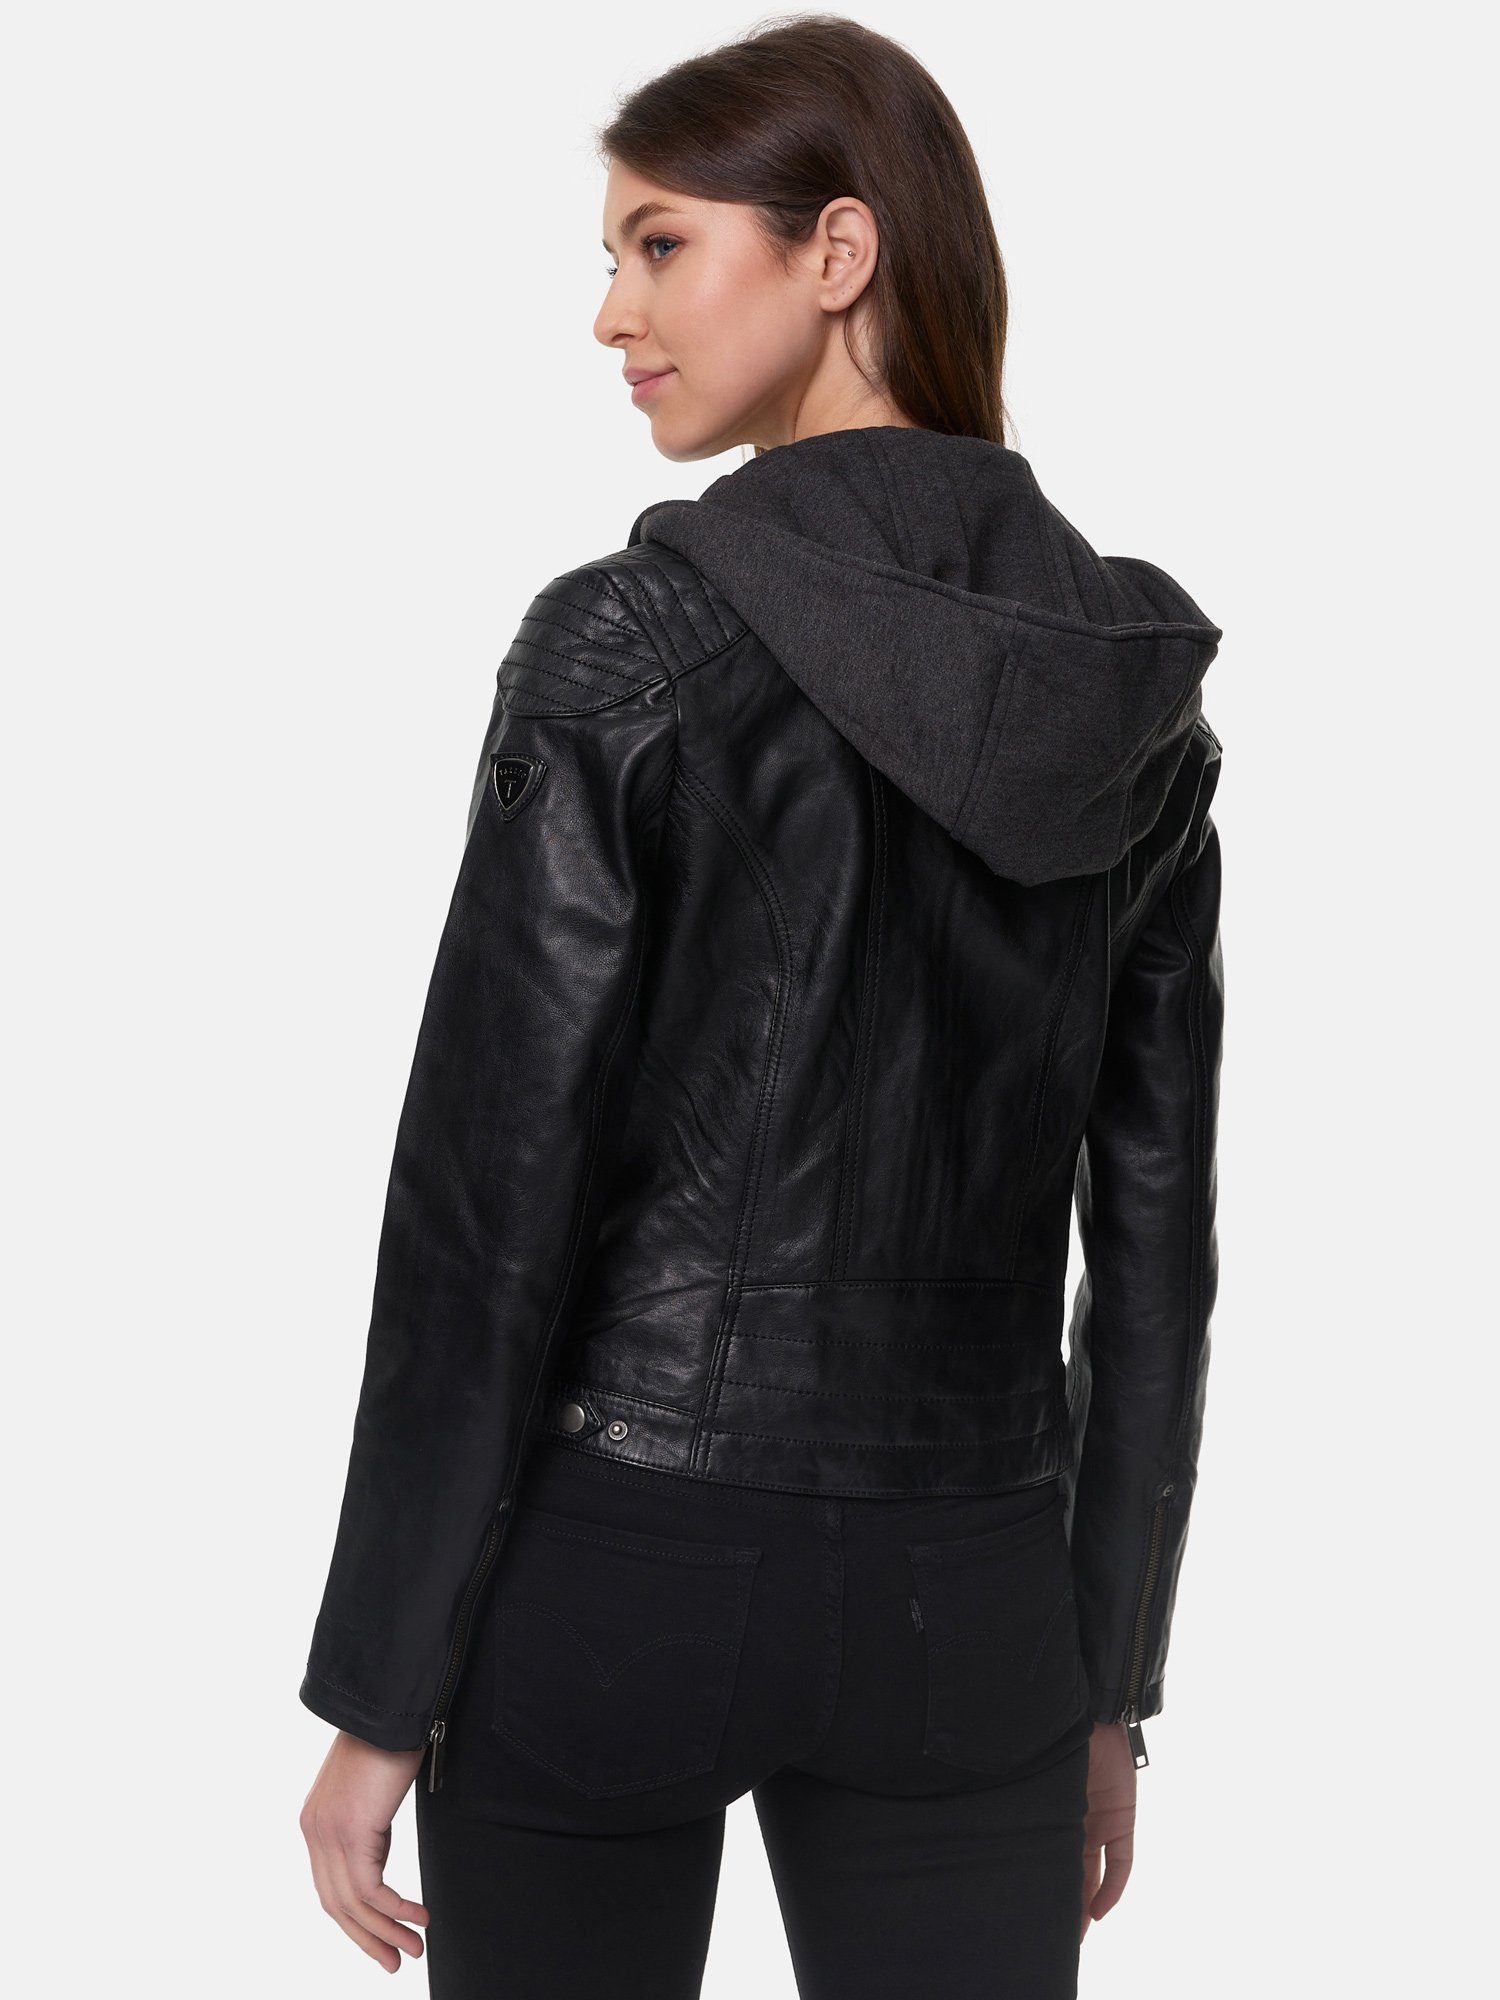 Kapuze schwarz Leder Jacke F503 mit im Damen abnehmbarer Look Tazzio Biker Lederjacke